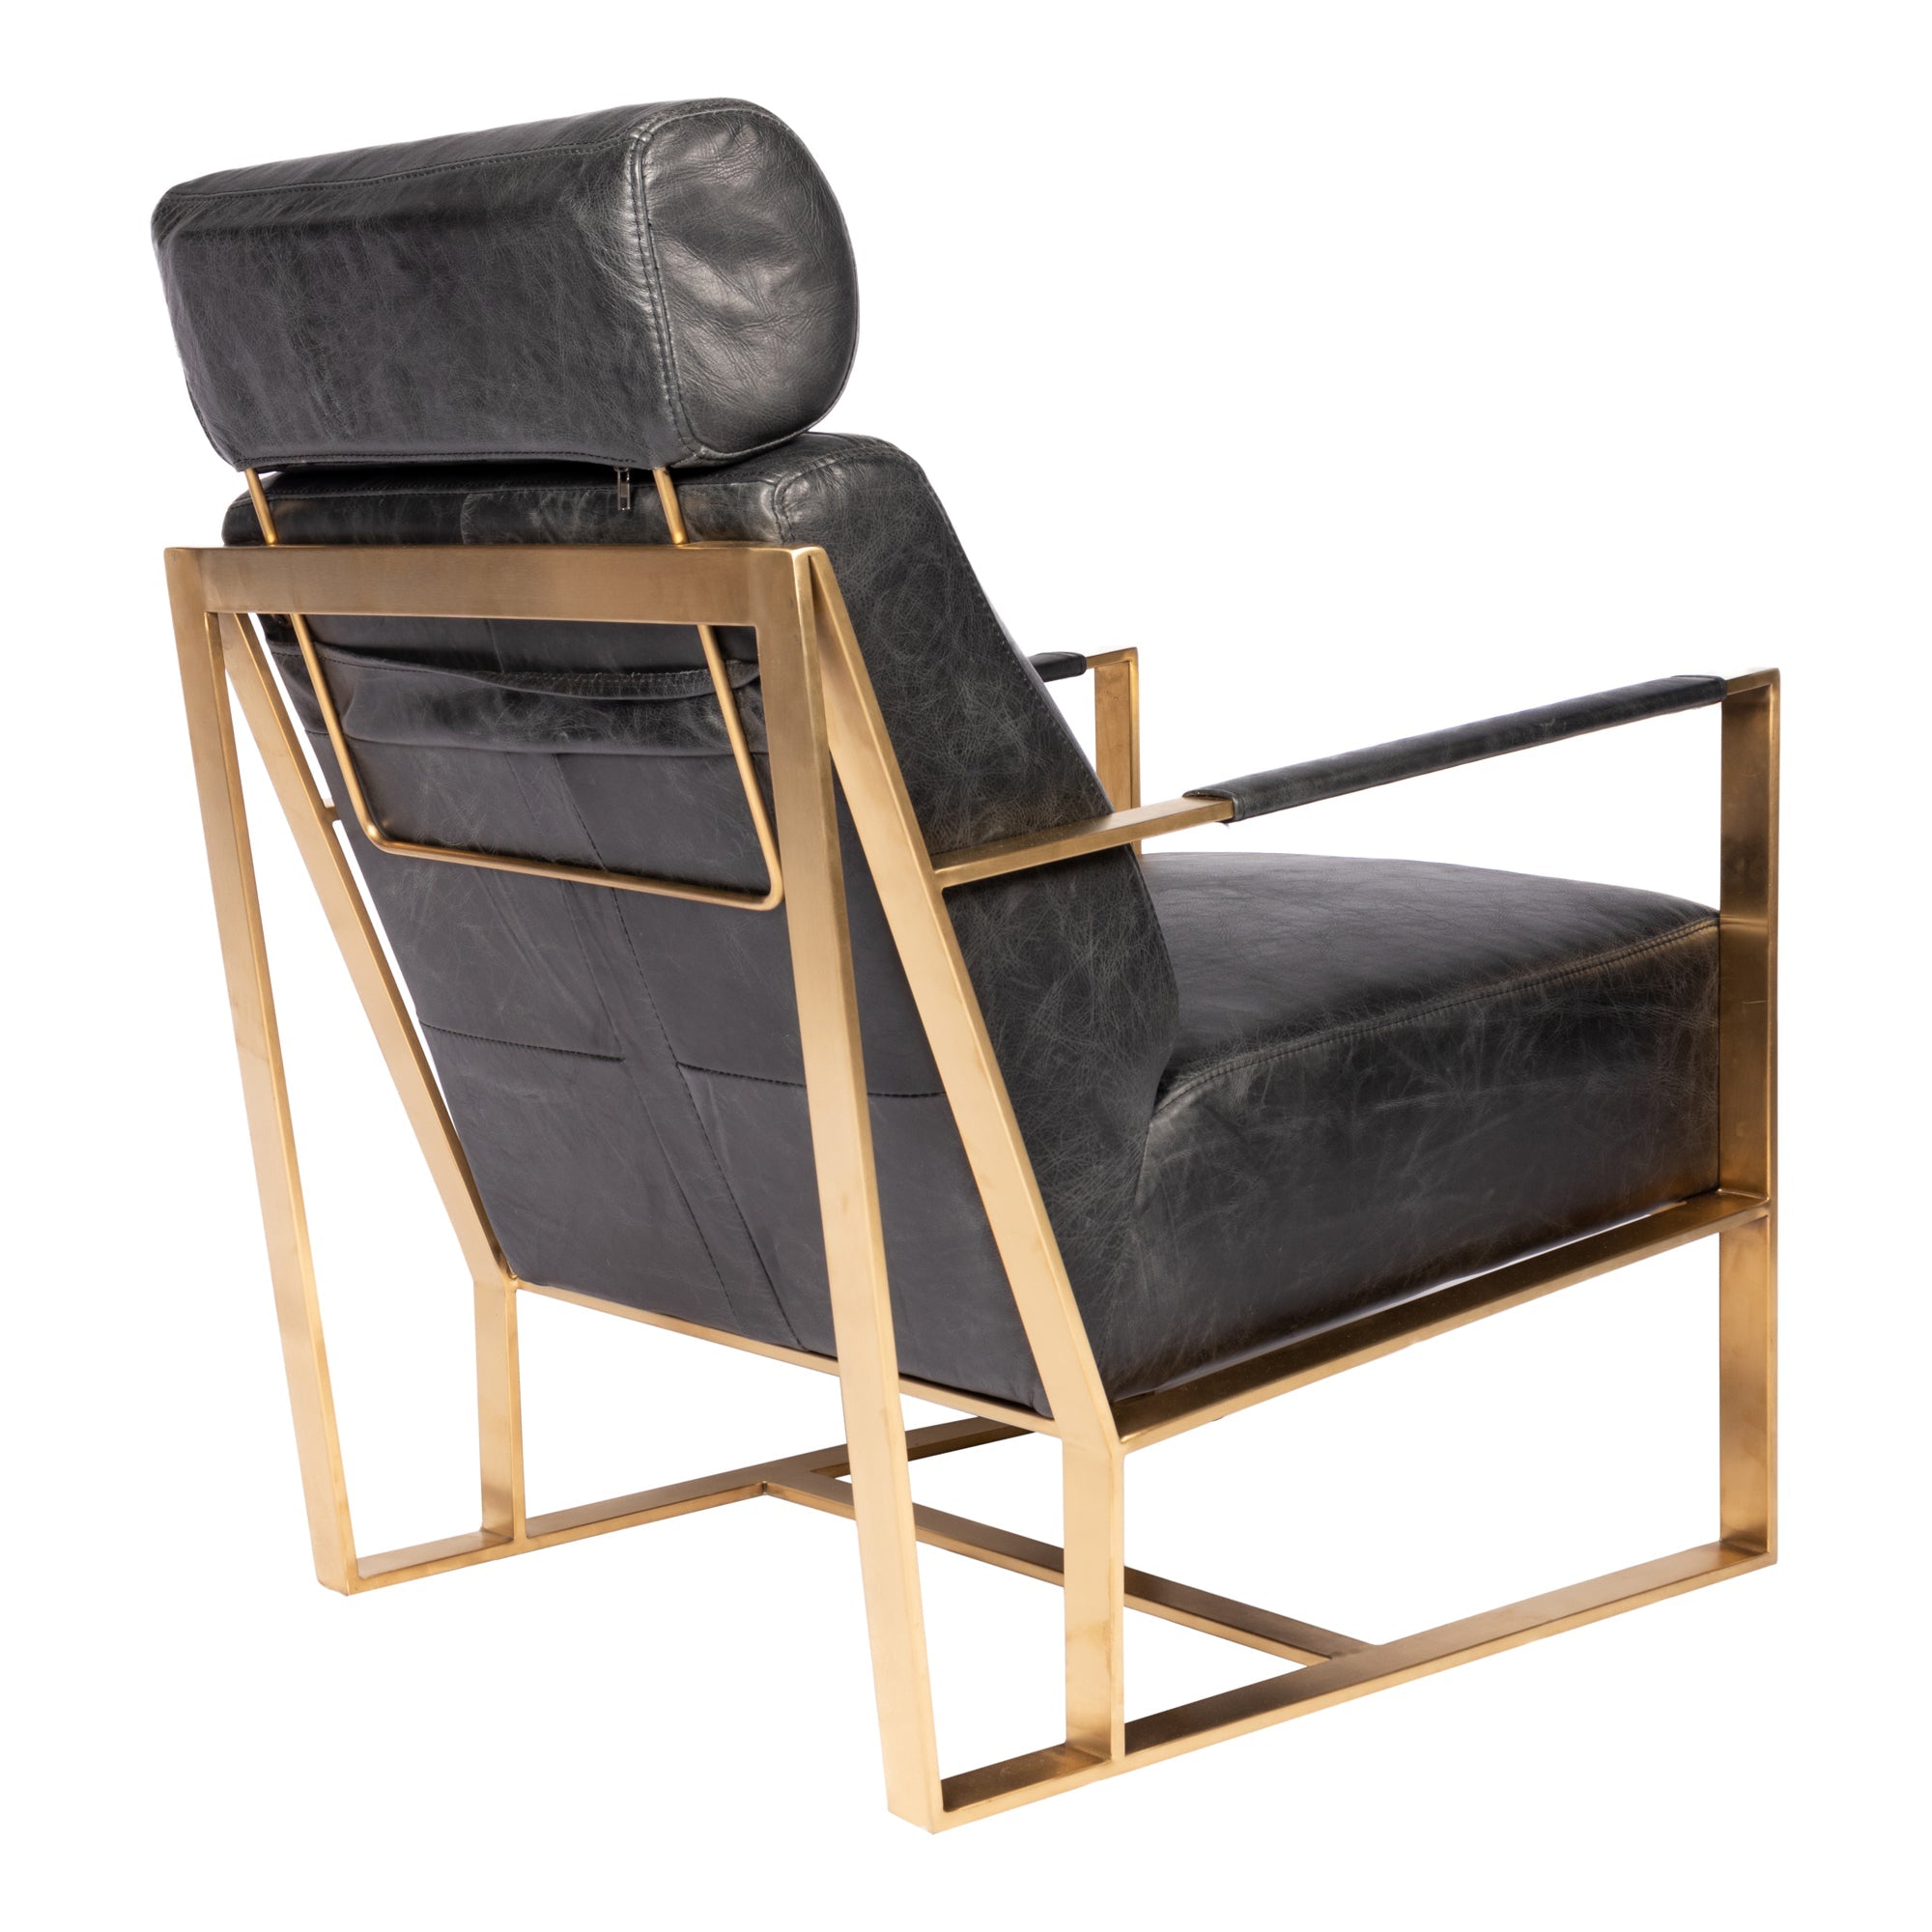 Paradiso Chair Black - Furniture - Tipplergoods